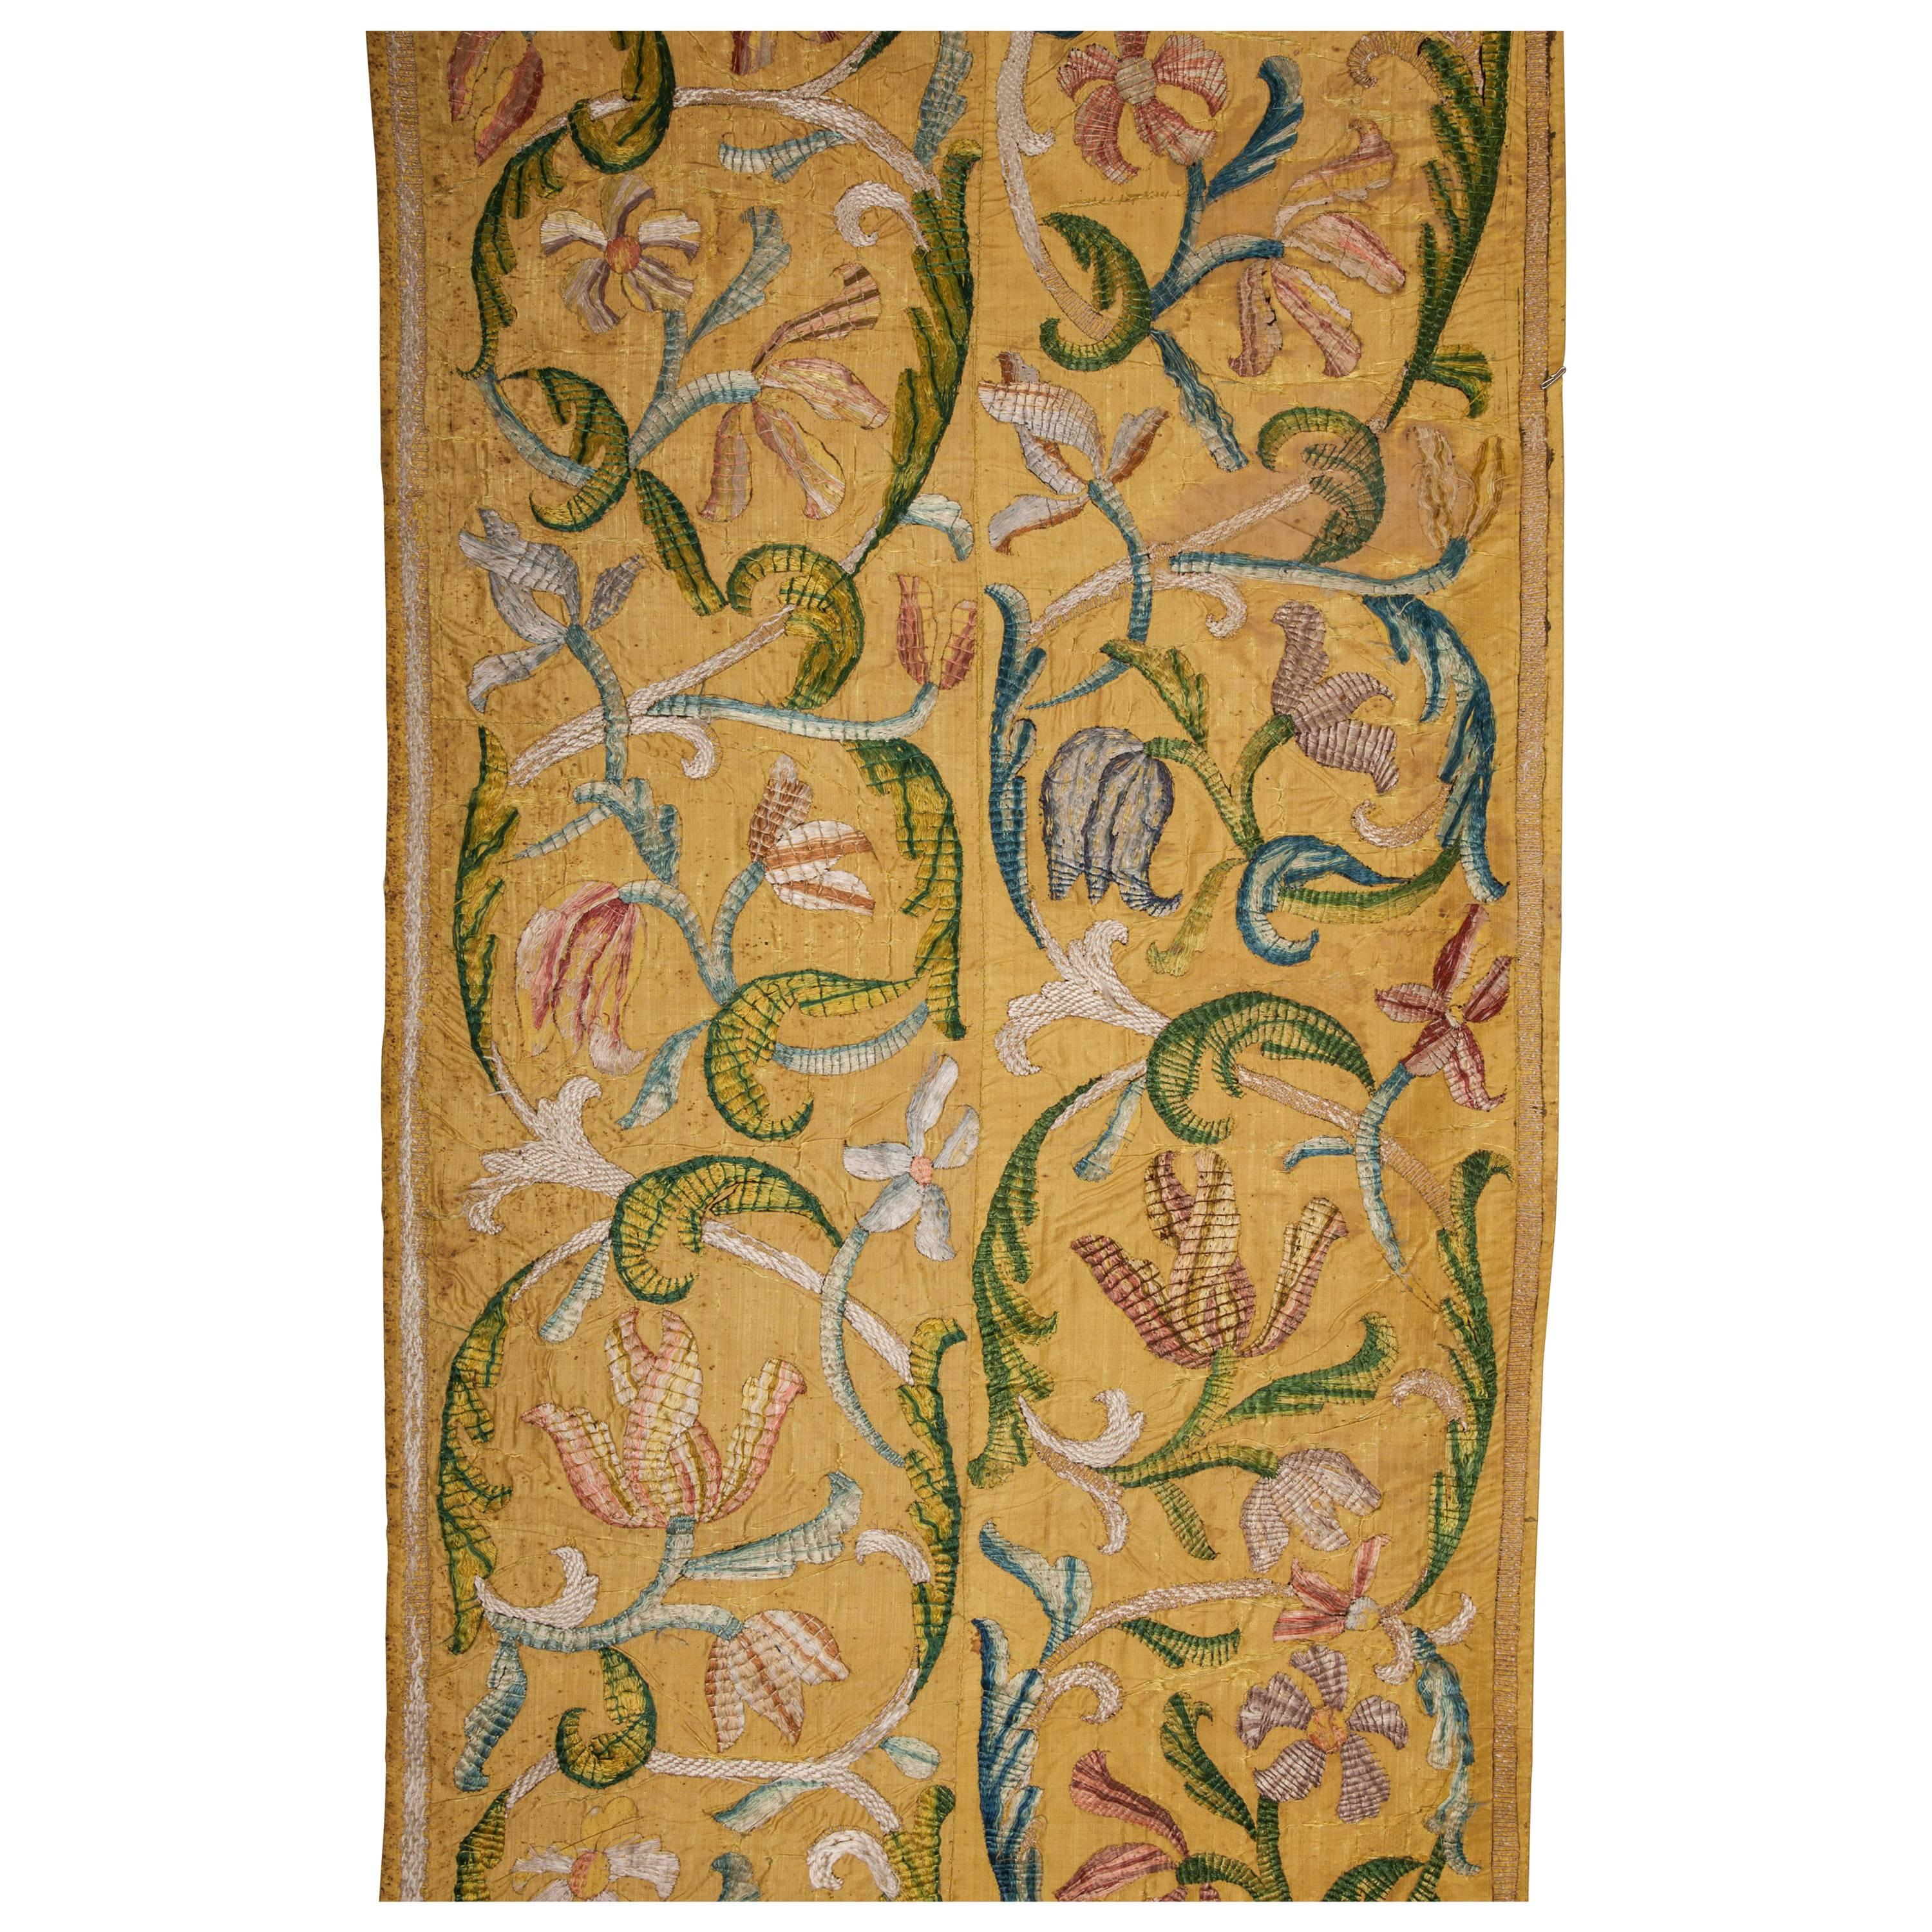 17th-18th Century Italian Silk Embroidery